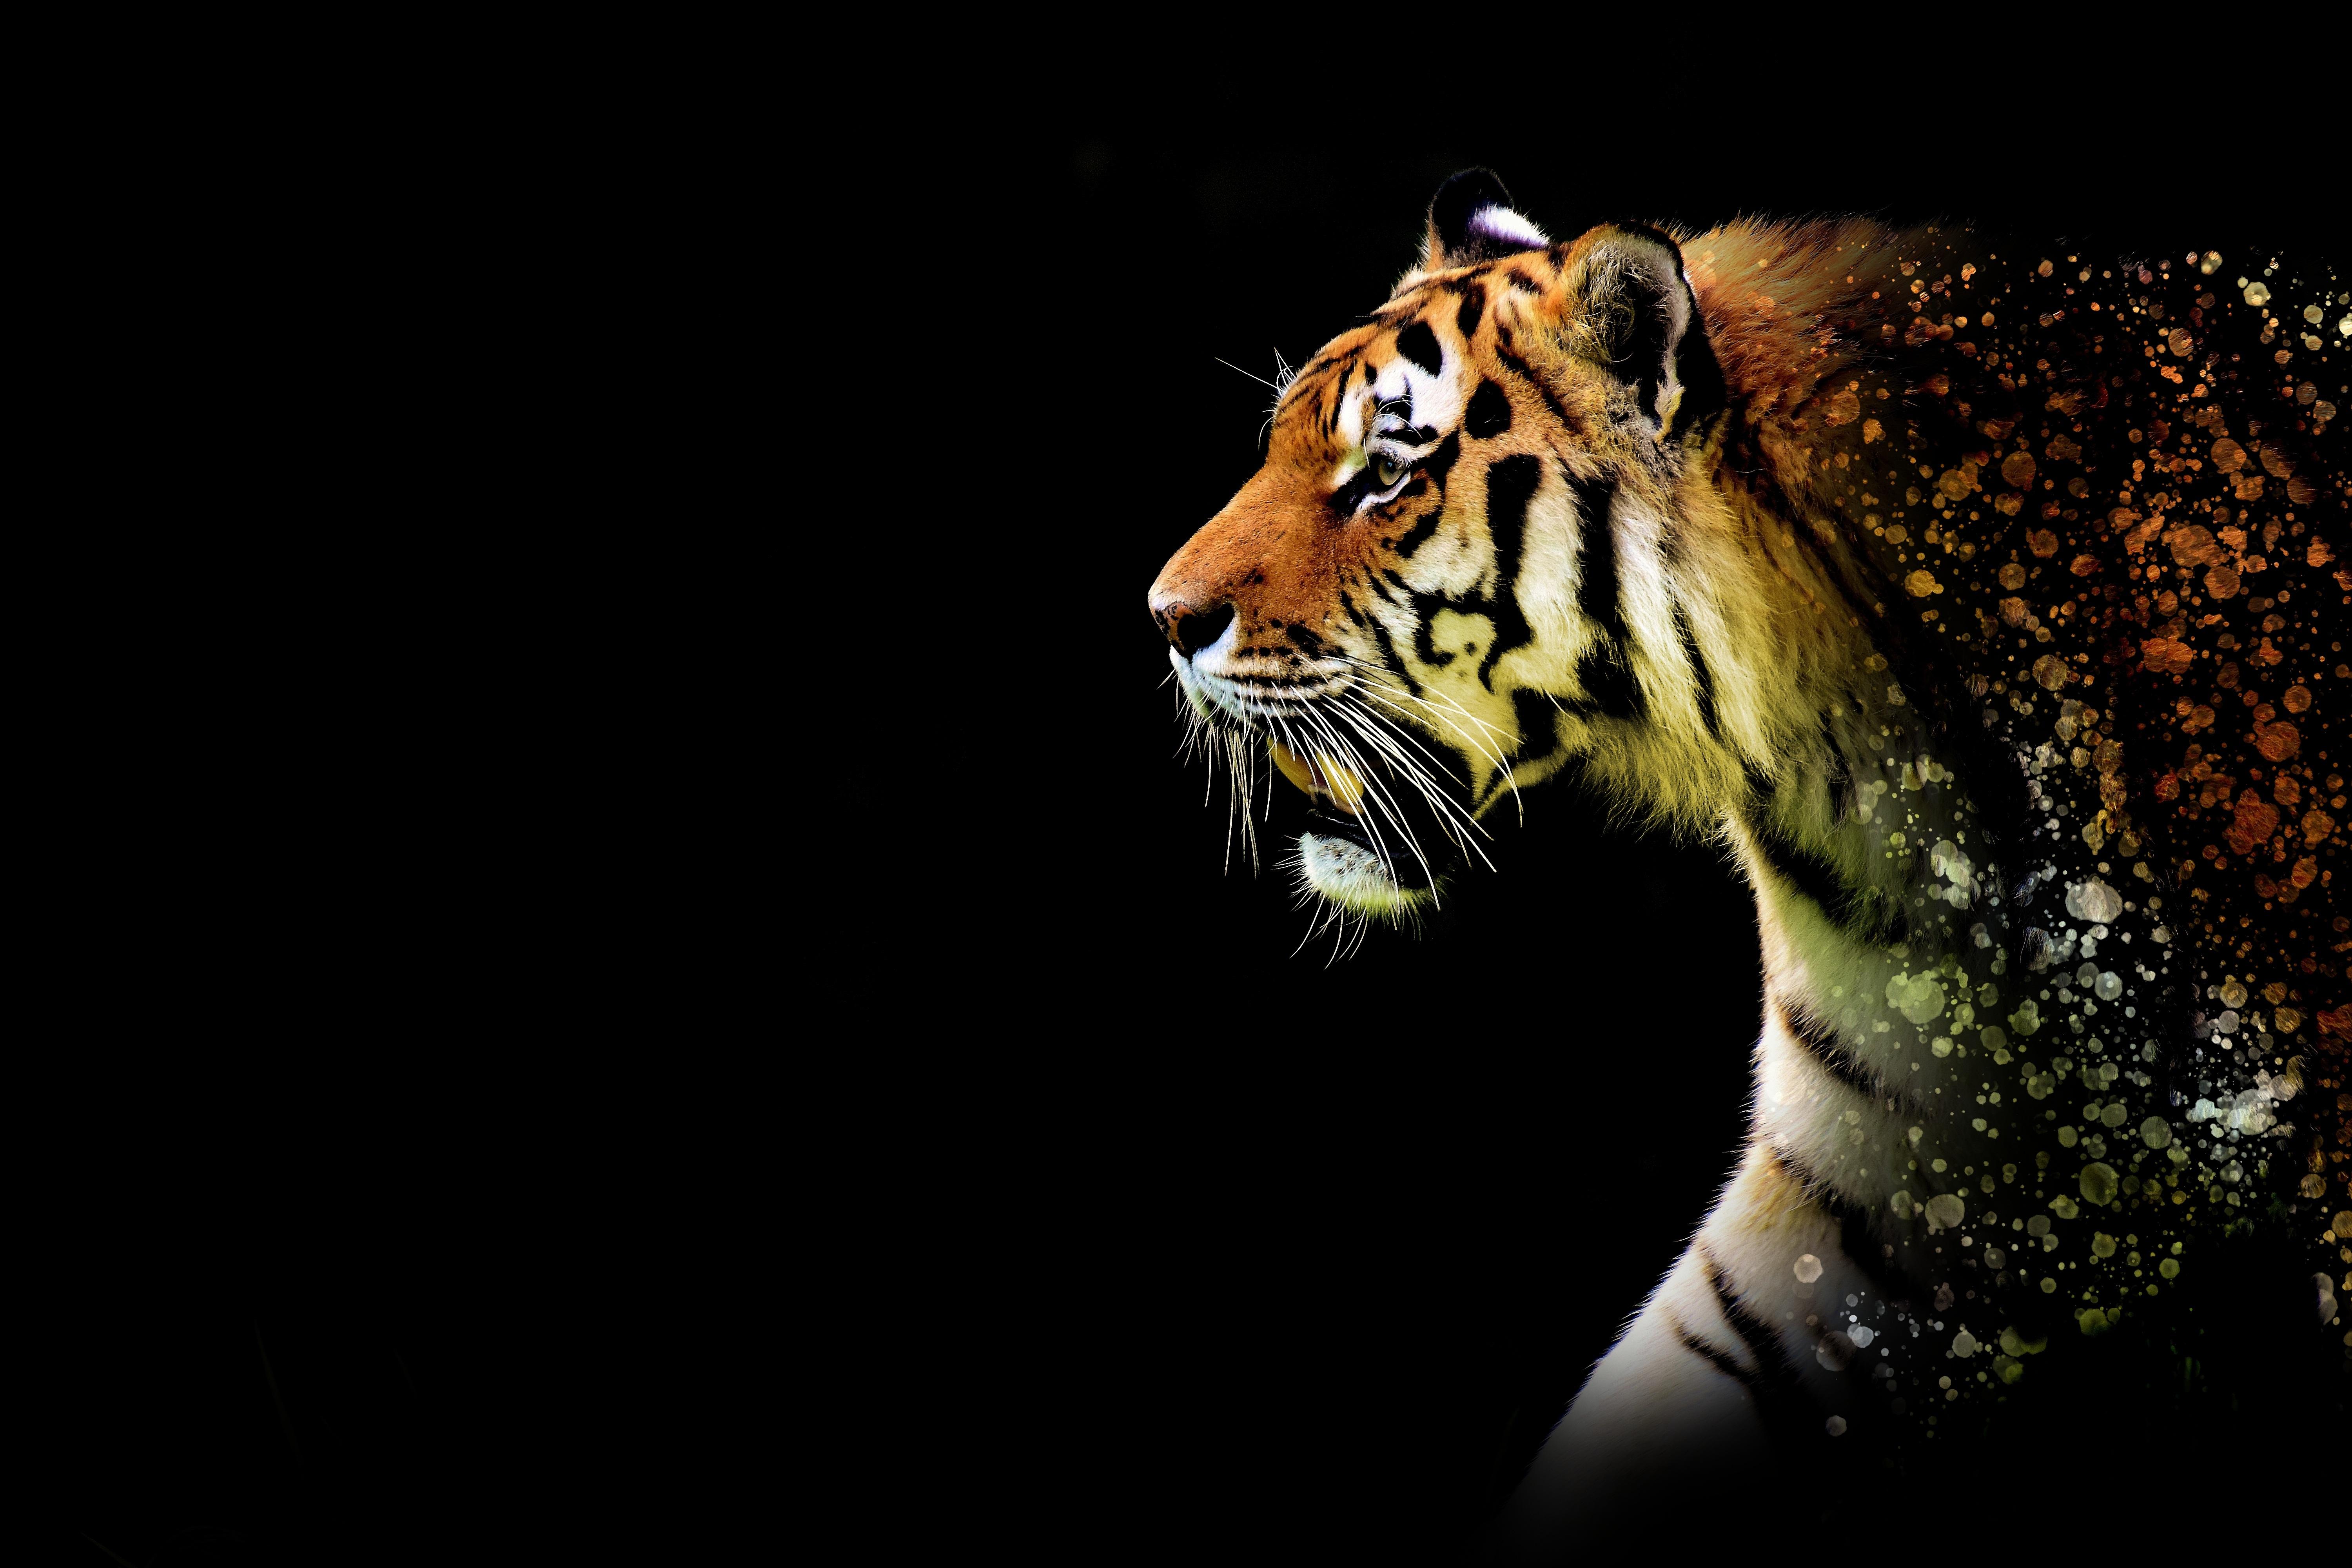 Tiger Abstract Wallpaper Download